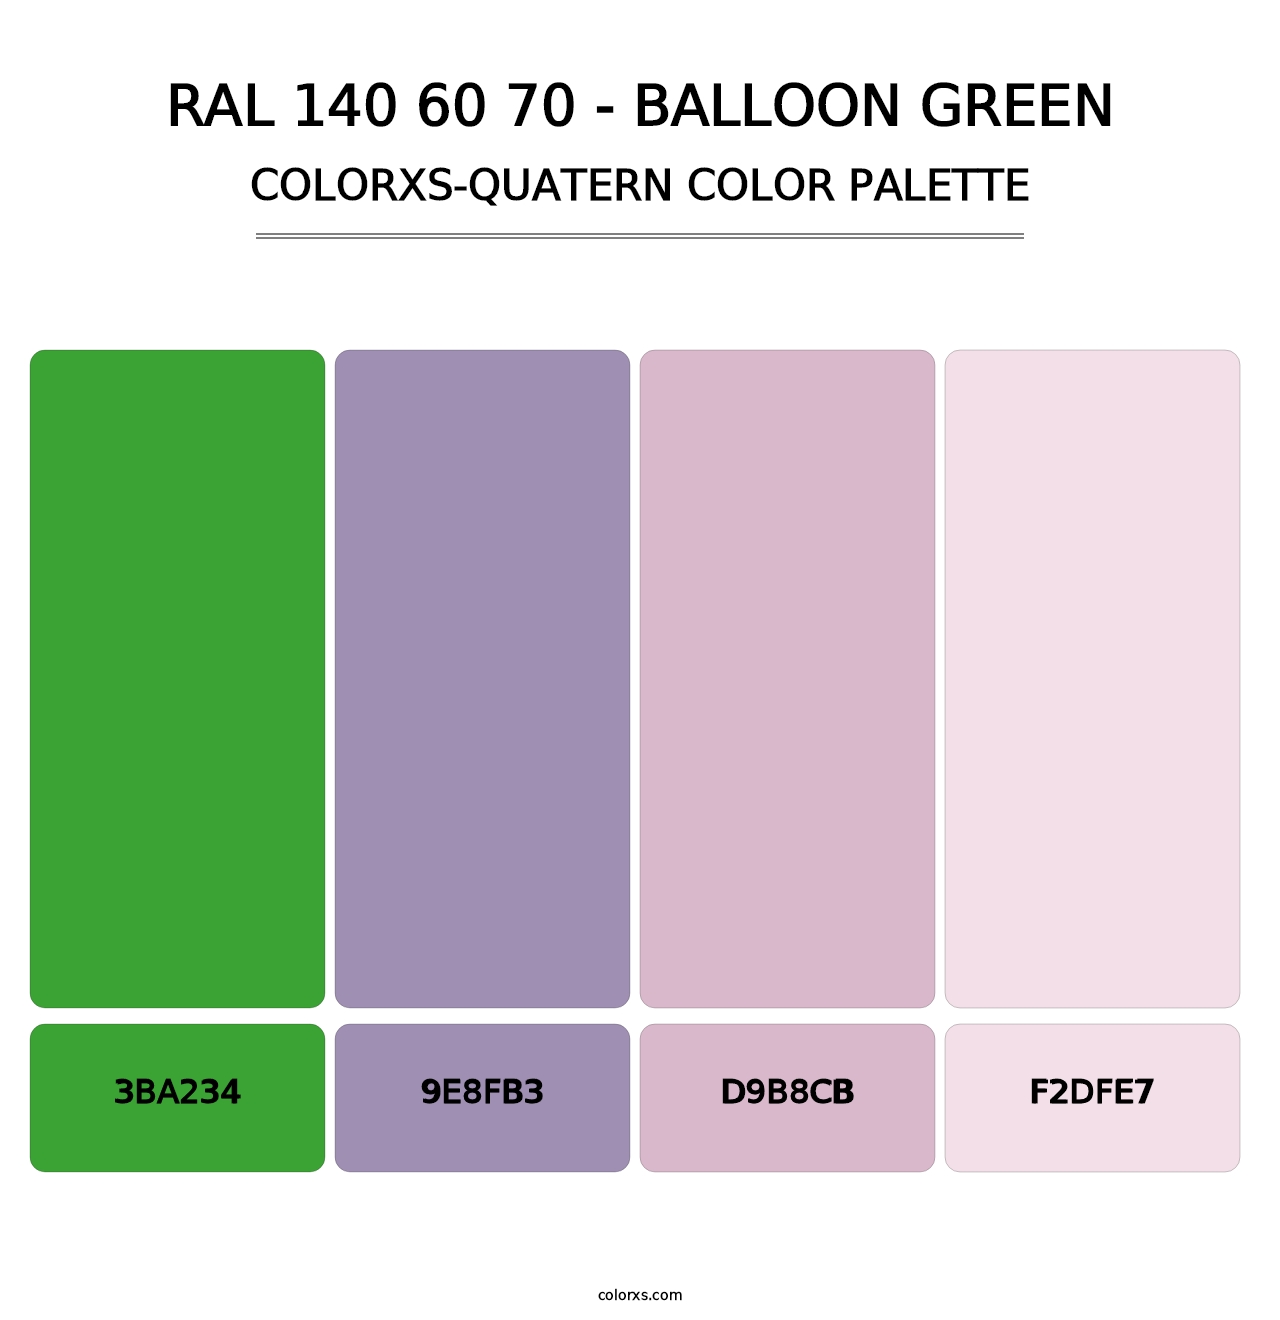 RAL 140 60 70 - Balloon Green - Colorxs Quatern Palette